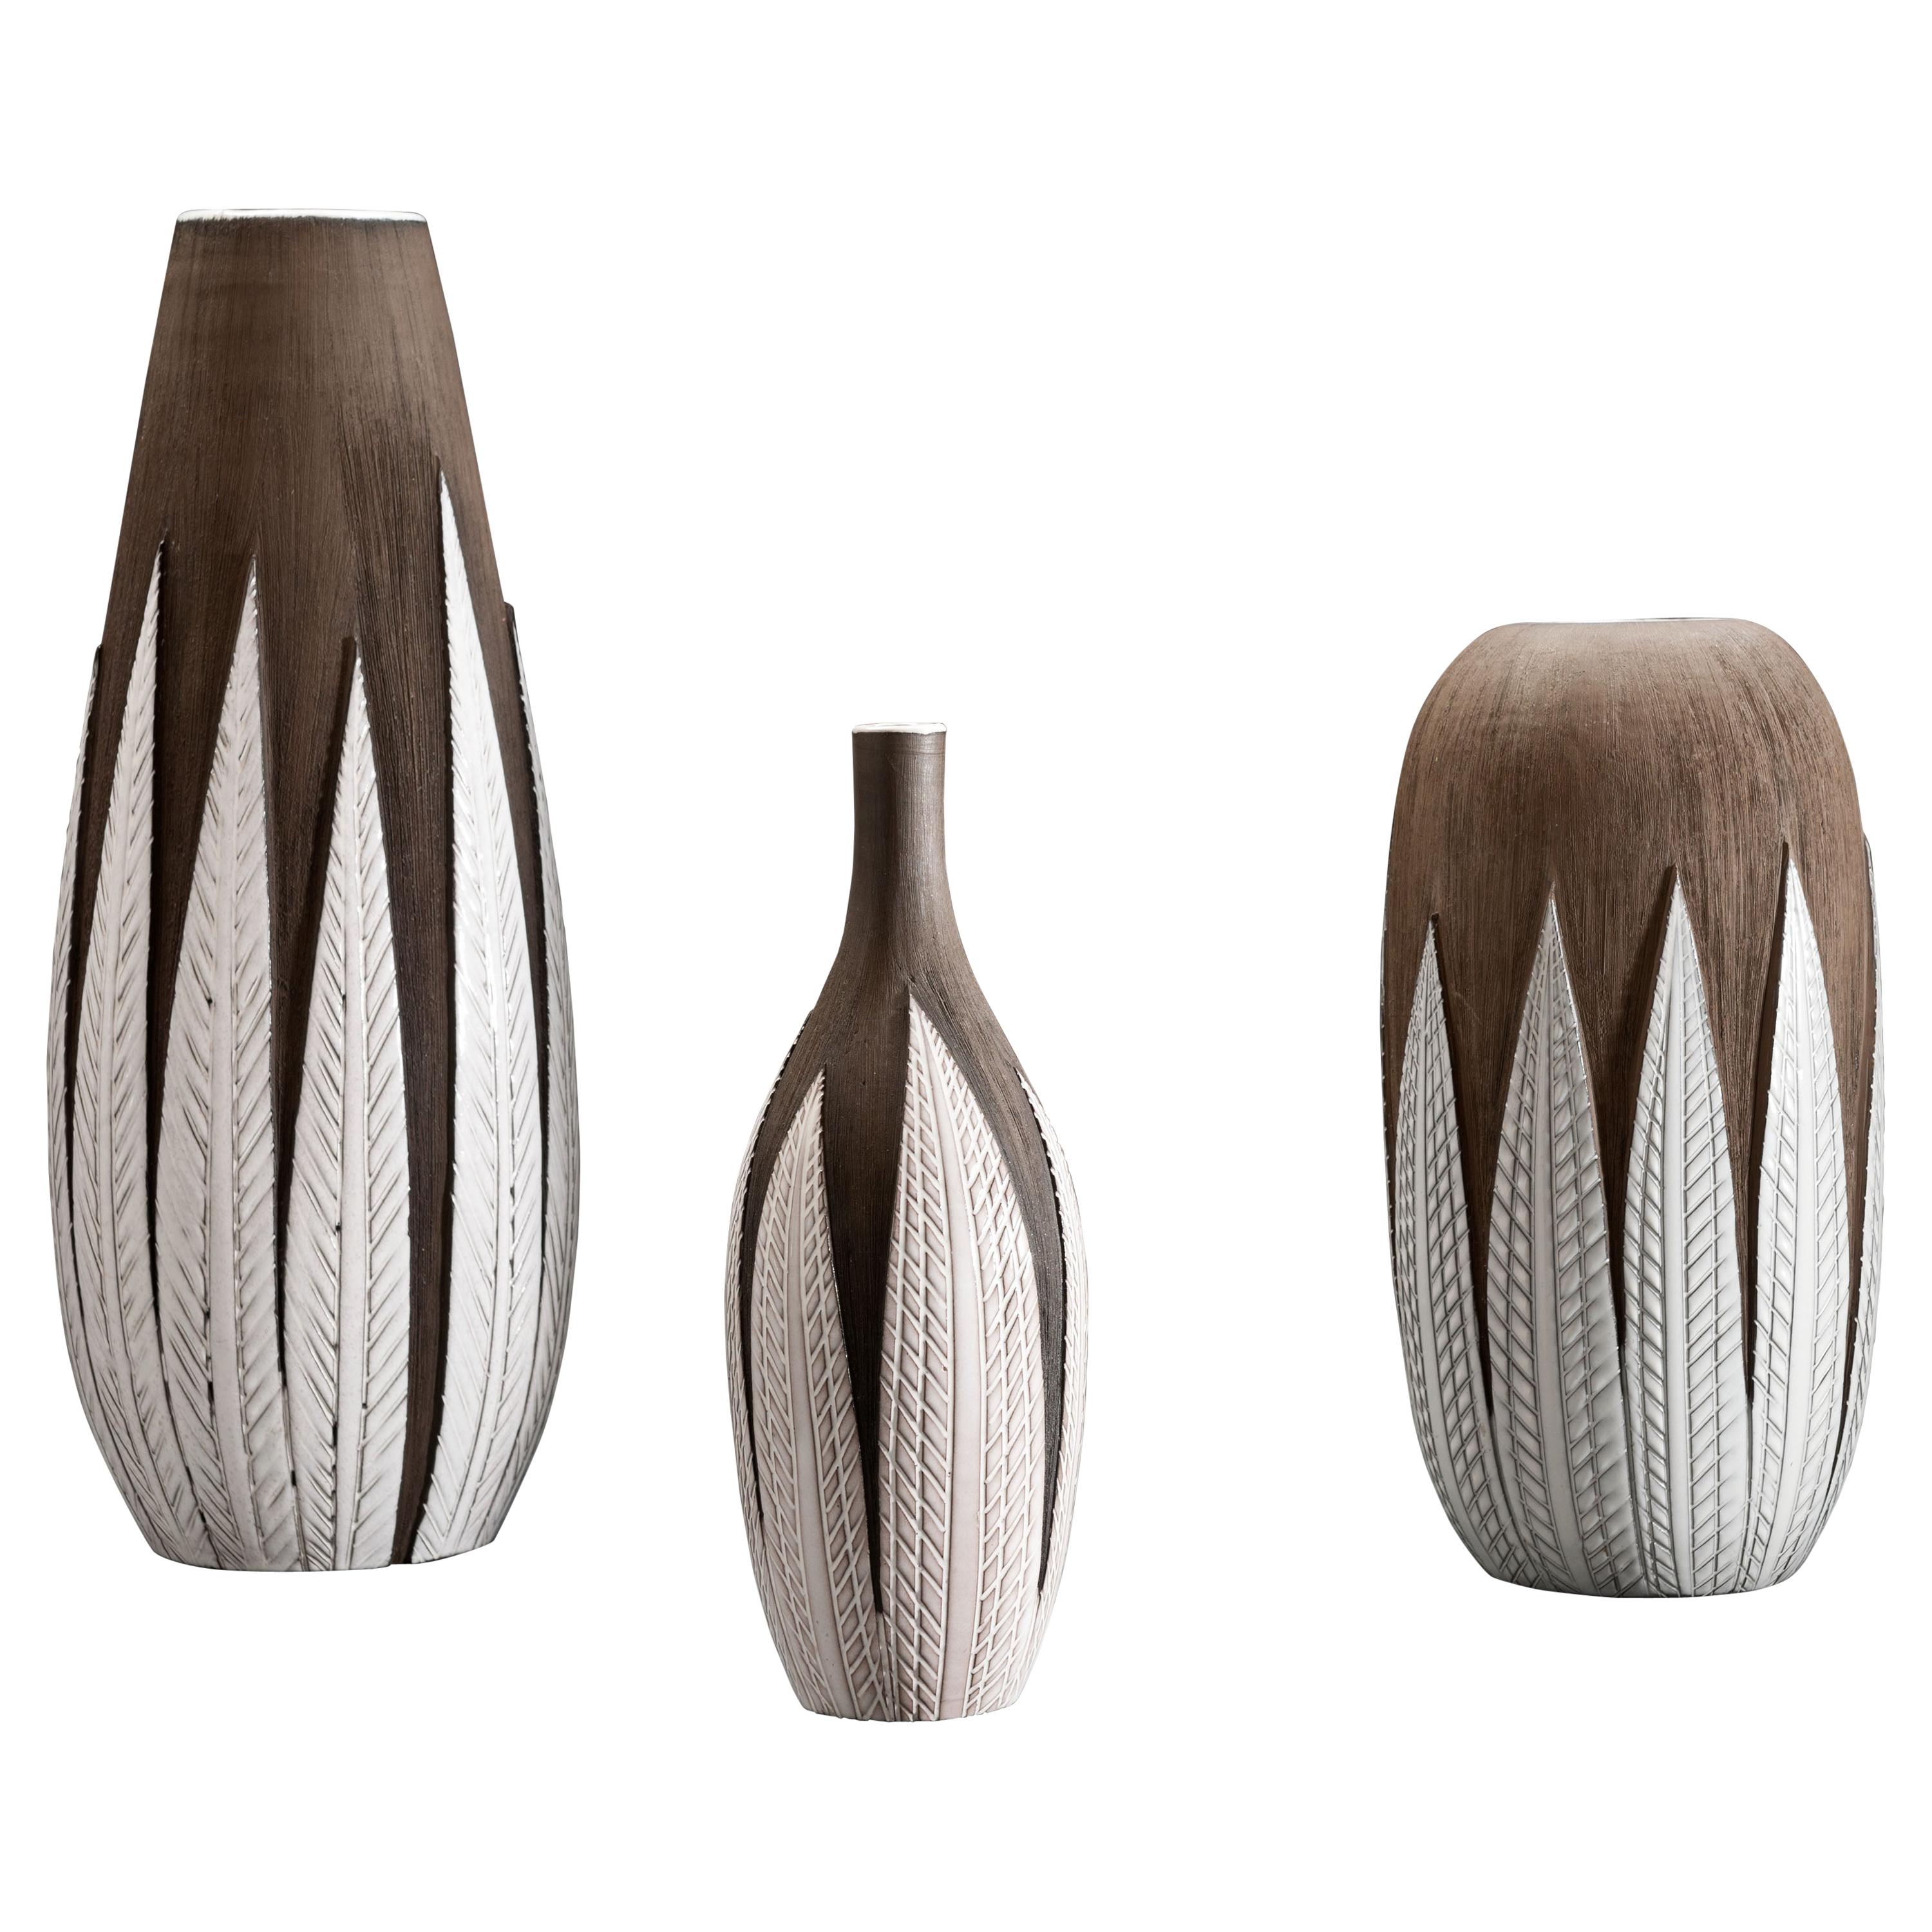 Anna-Lisa Thomson Ceramic 'Paprika' Vases (3) by Upsala Ekeby